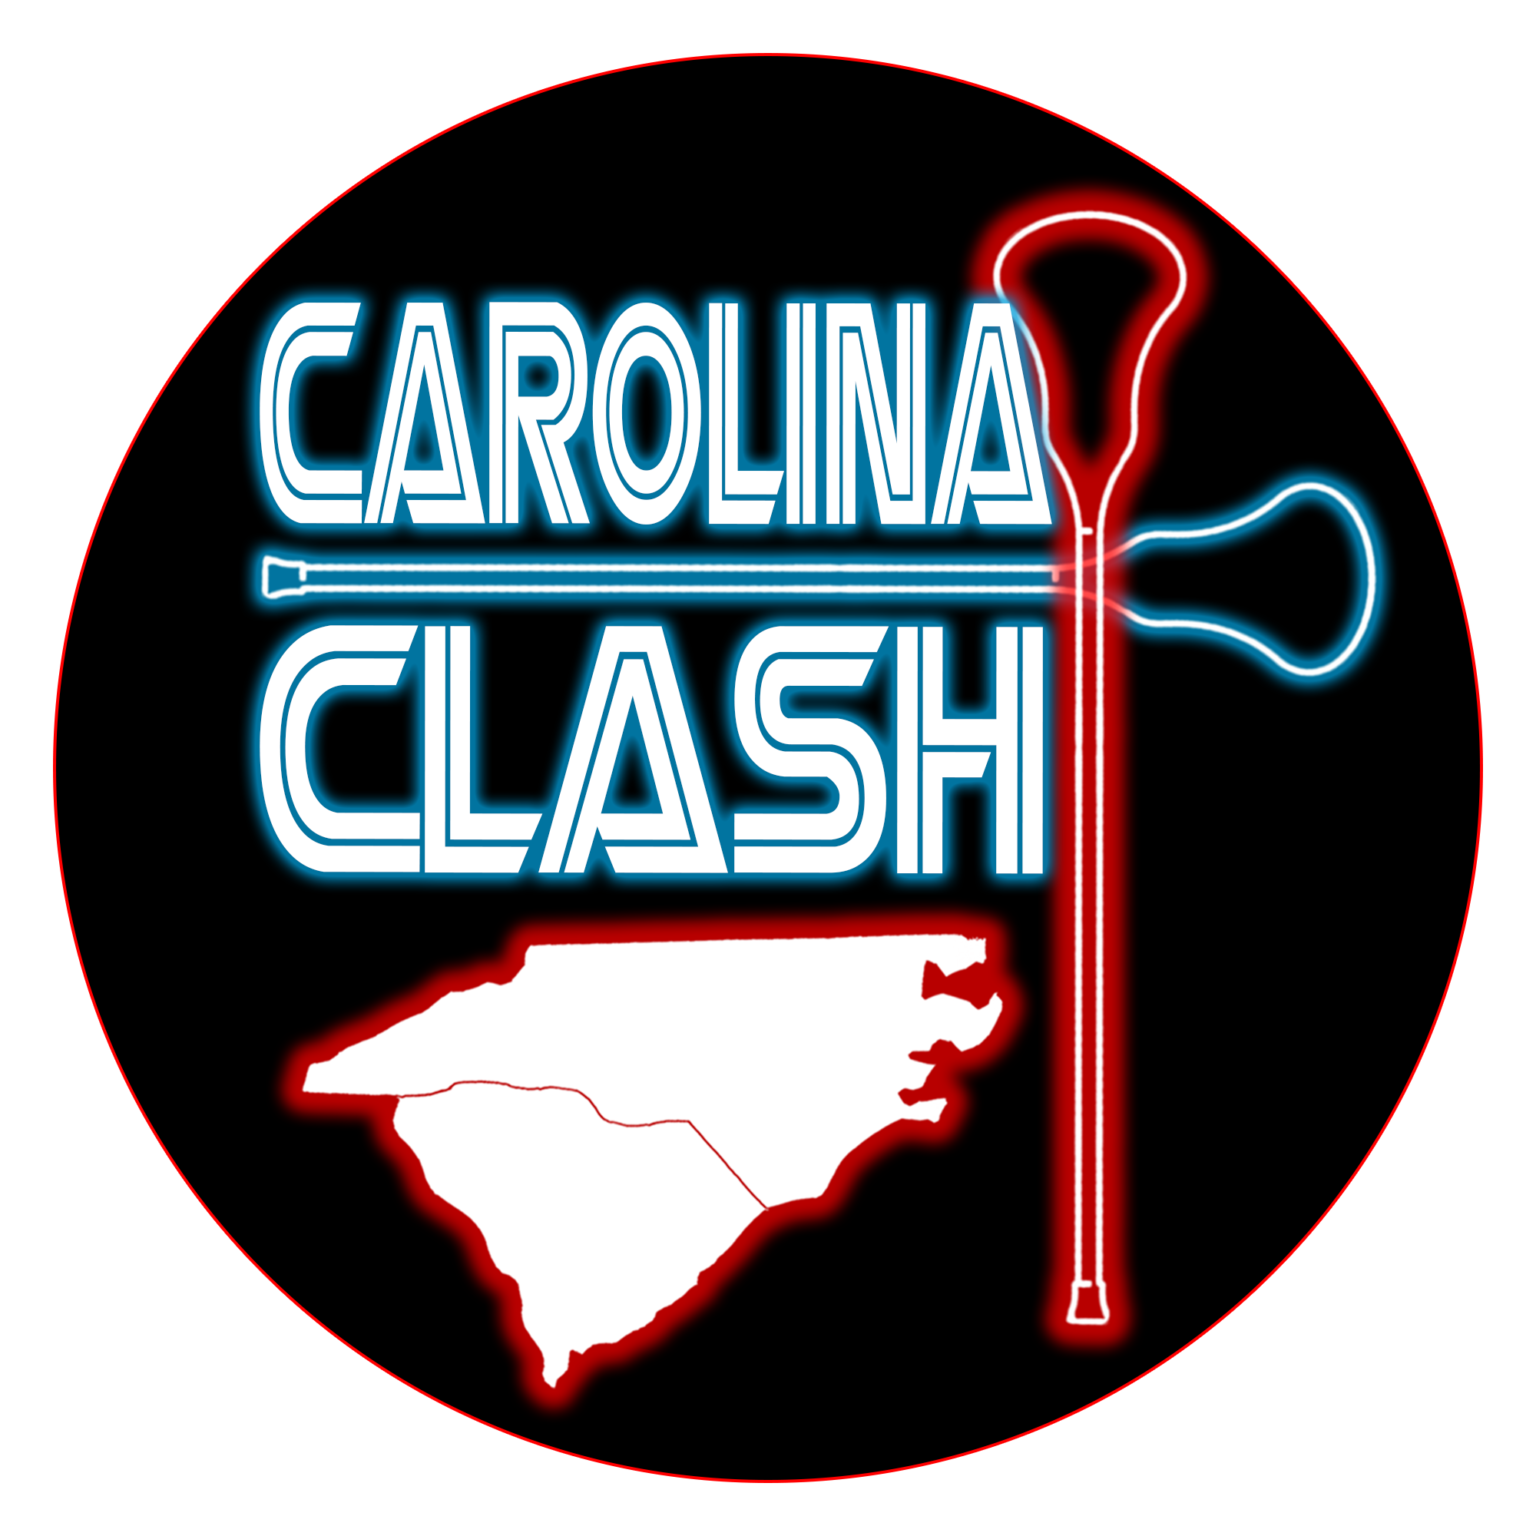 Carolina_Clash_Lacrosse_Tournament-1536x1536